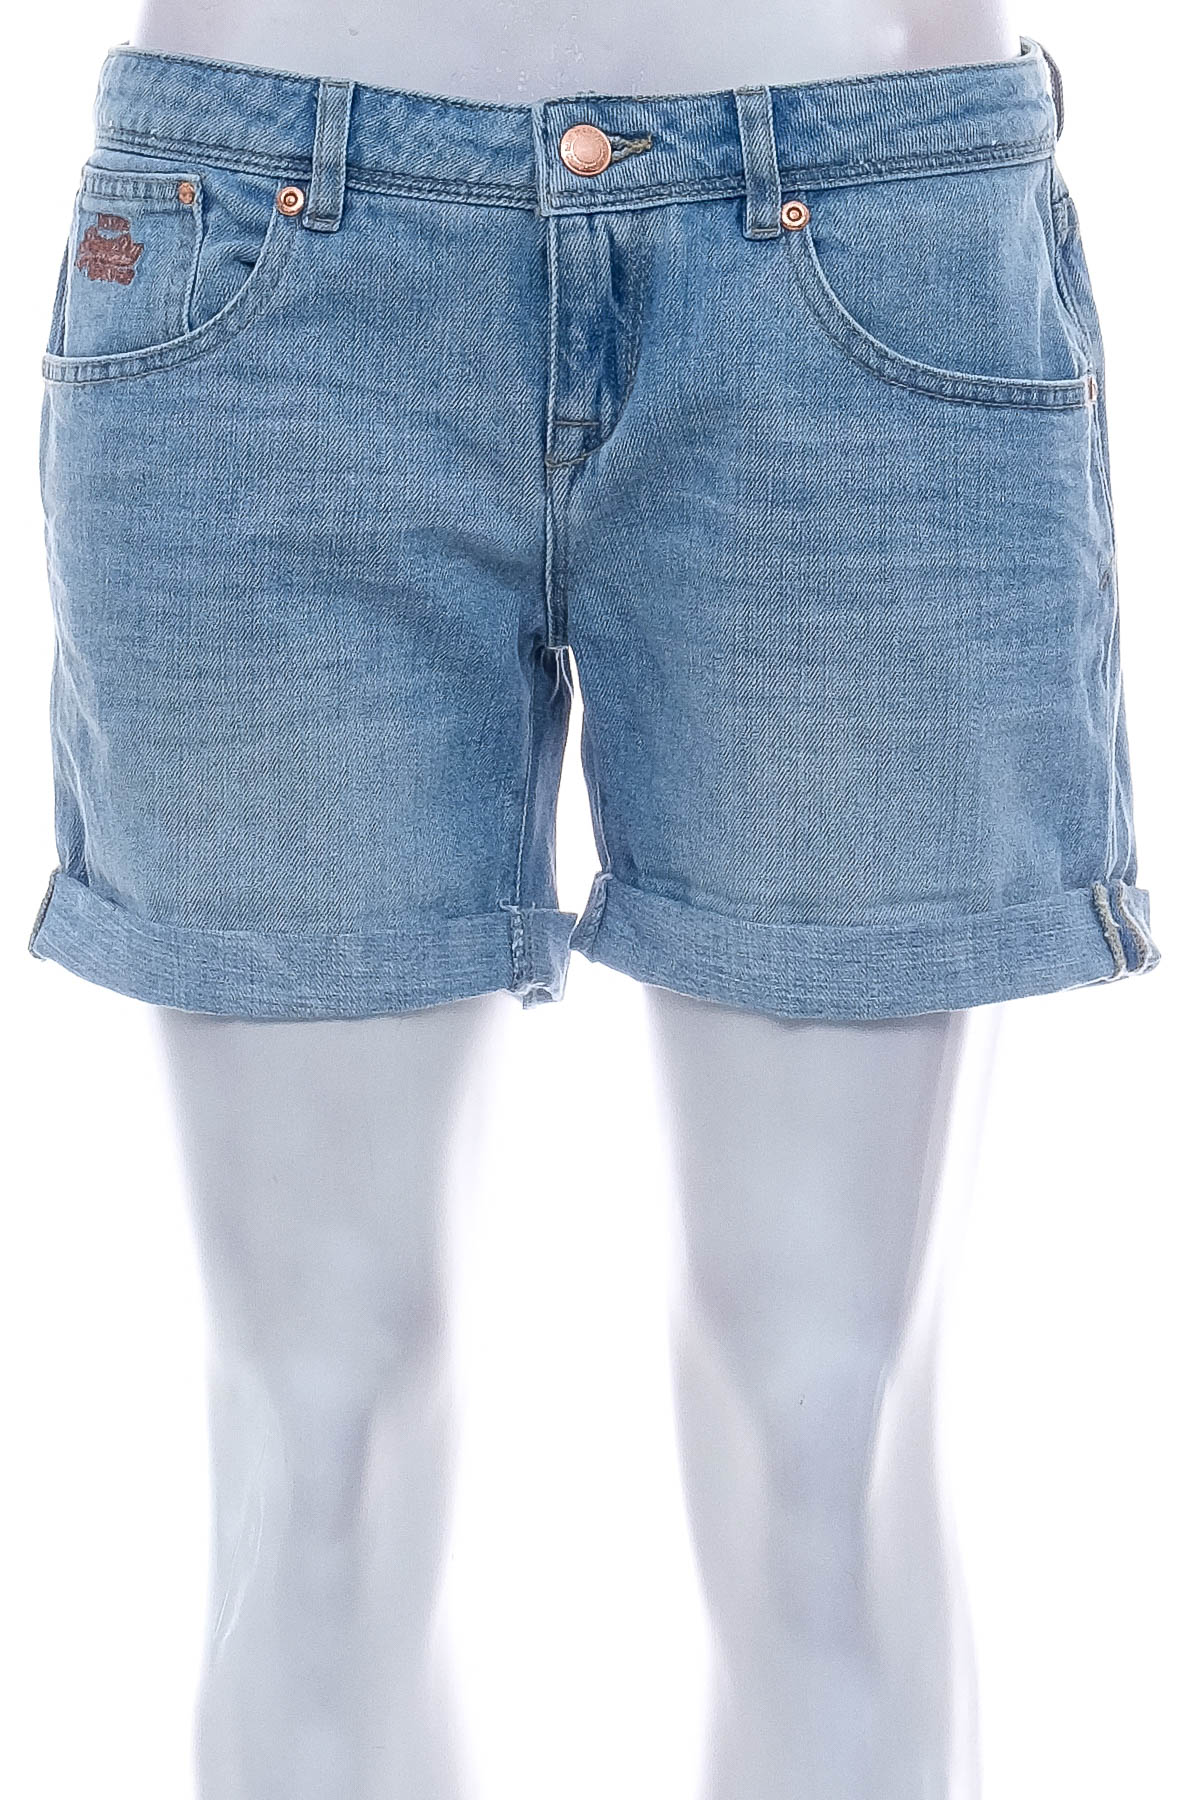 Female shorts - SuperDry - 0